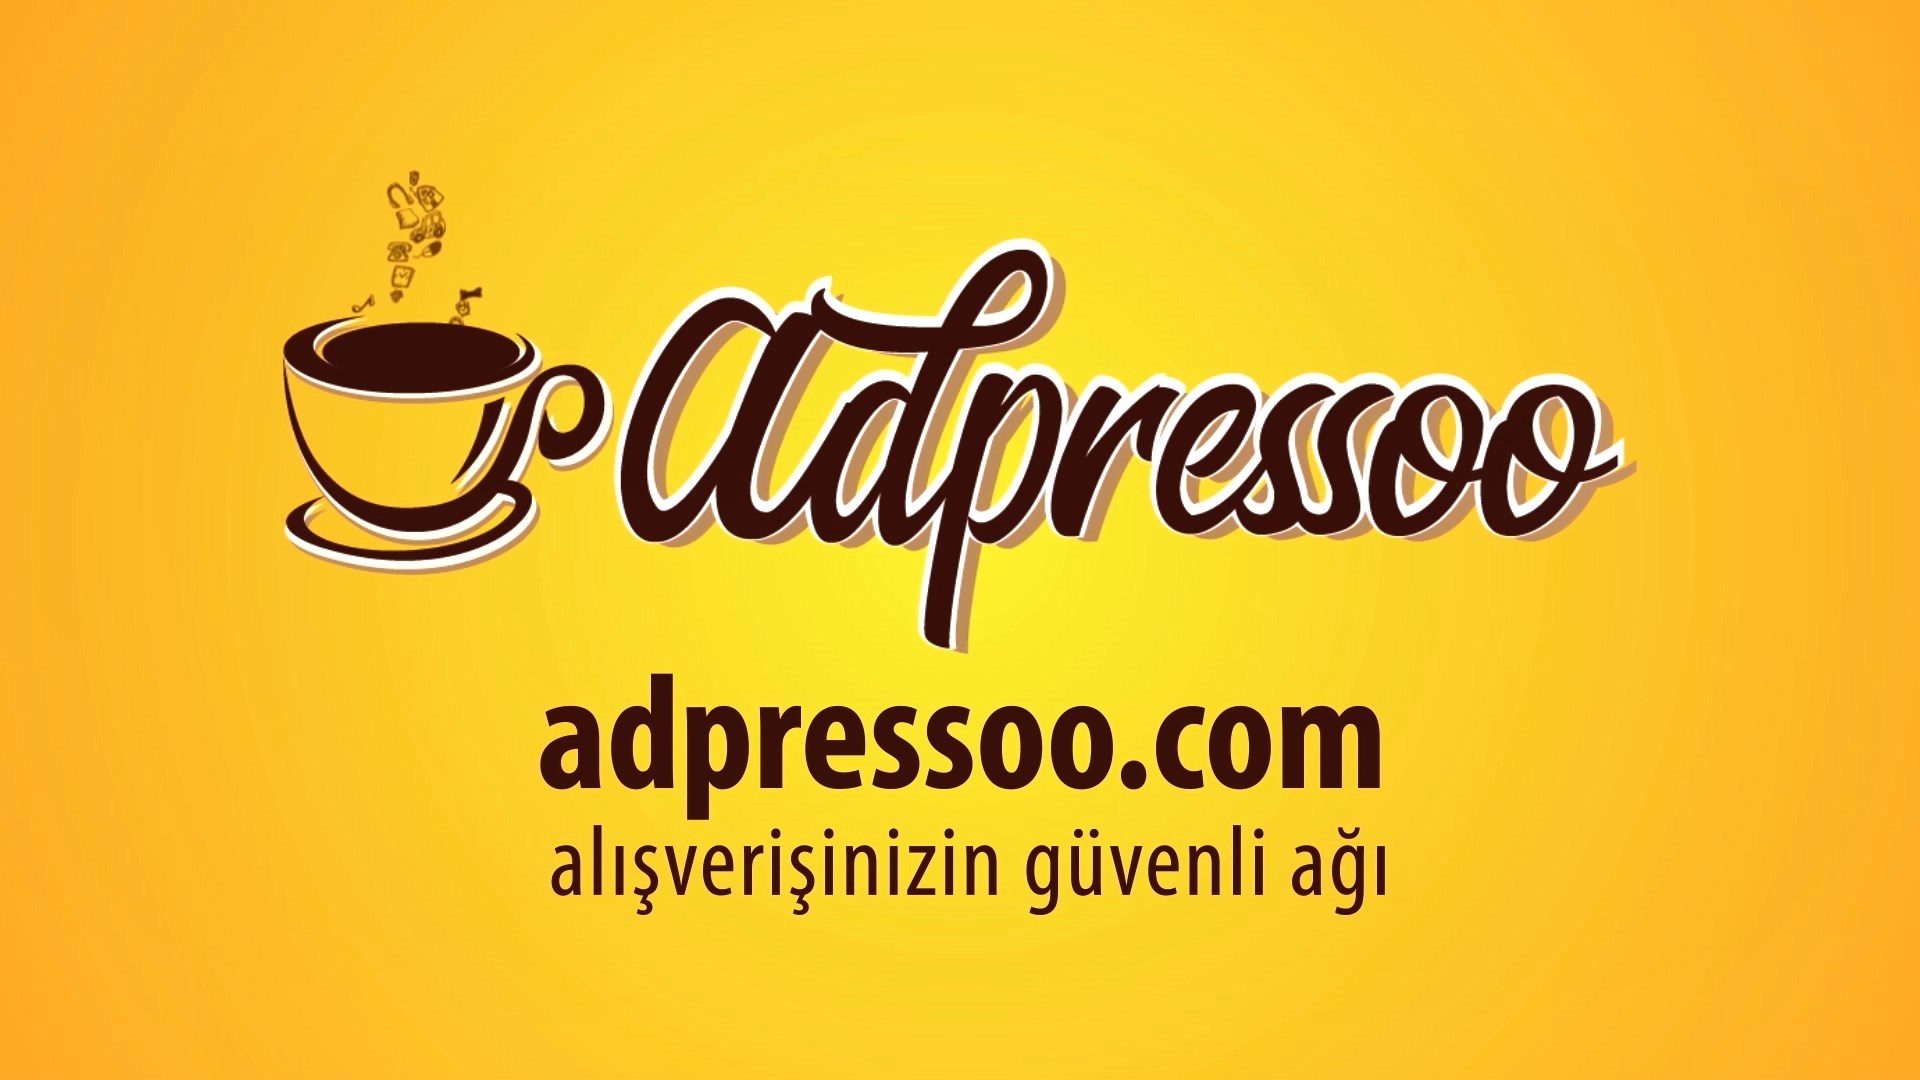 aspressoo.com 9 1920x1080 - Reklam Filmi